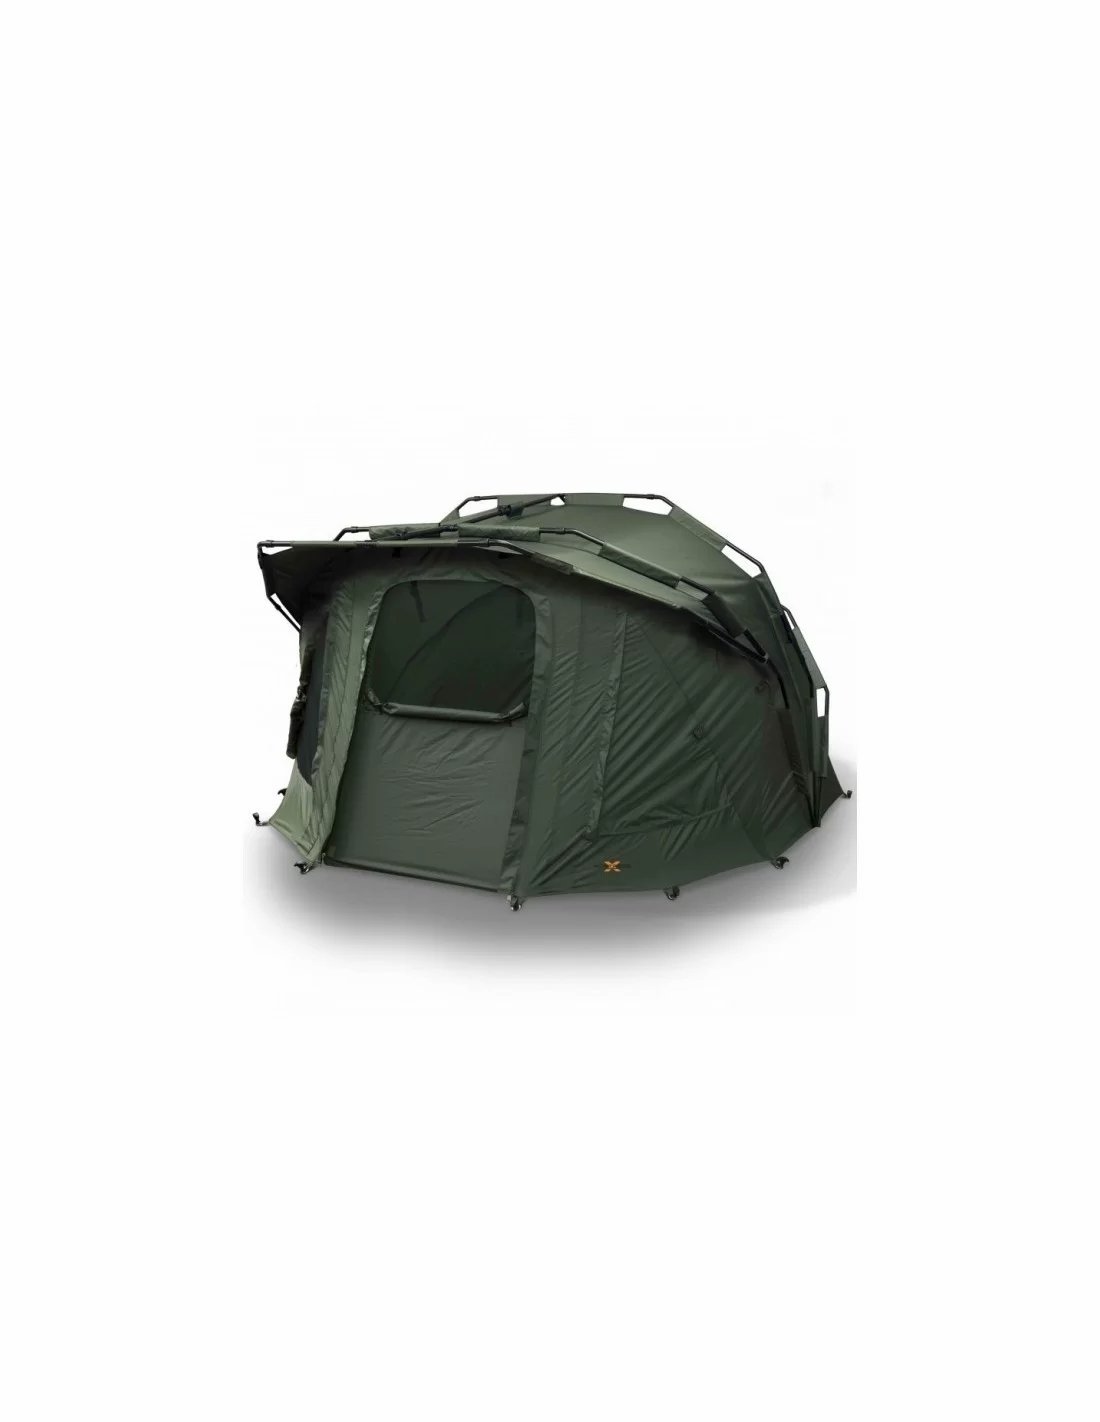 NGT 2 Man Fortress палатка